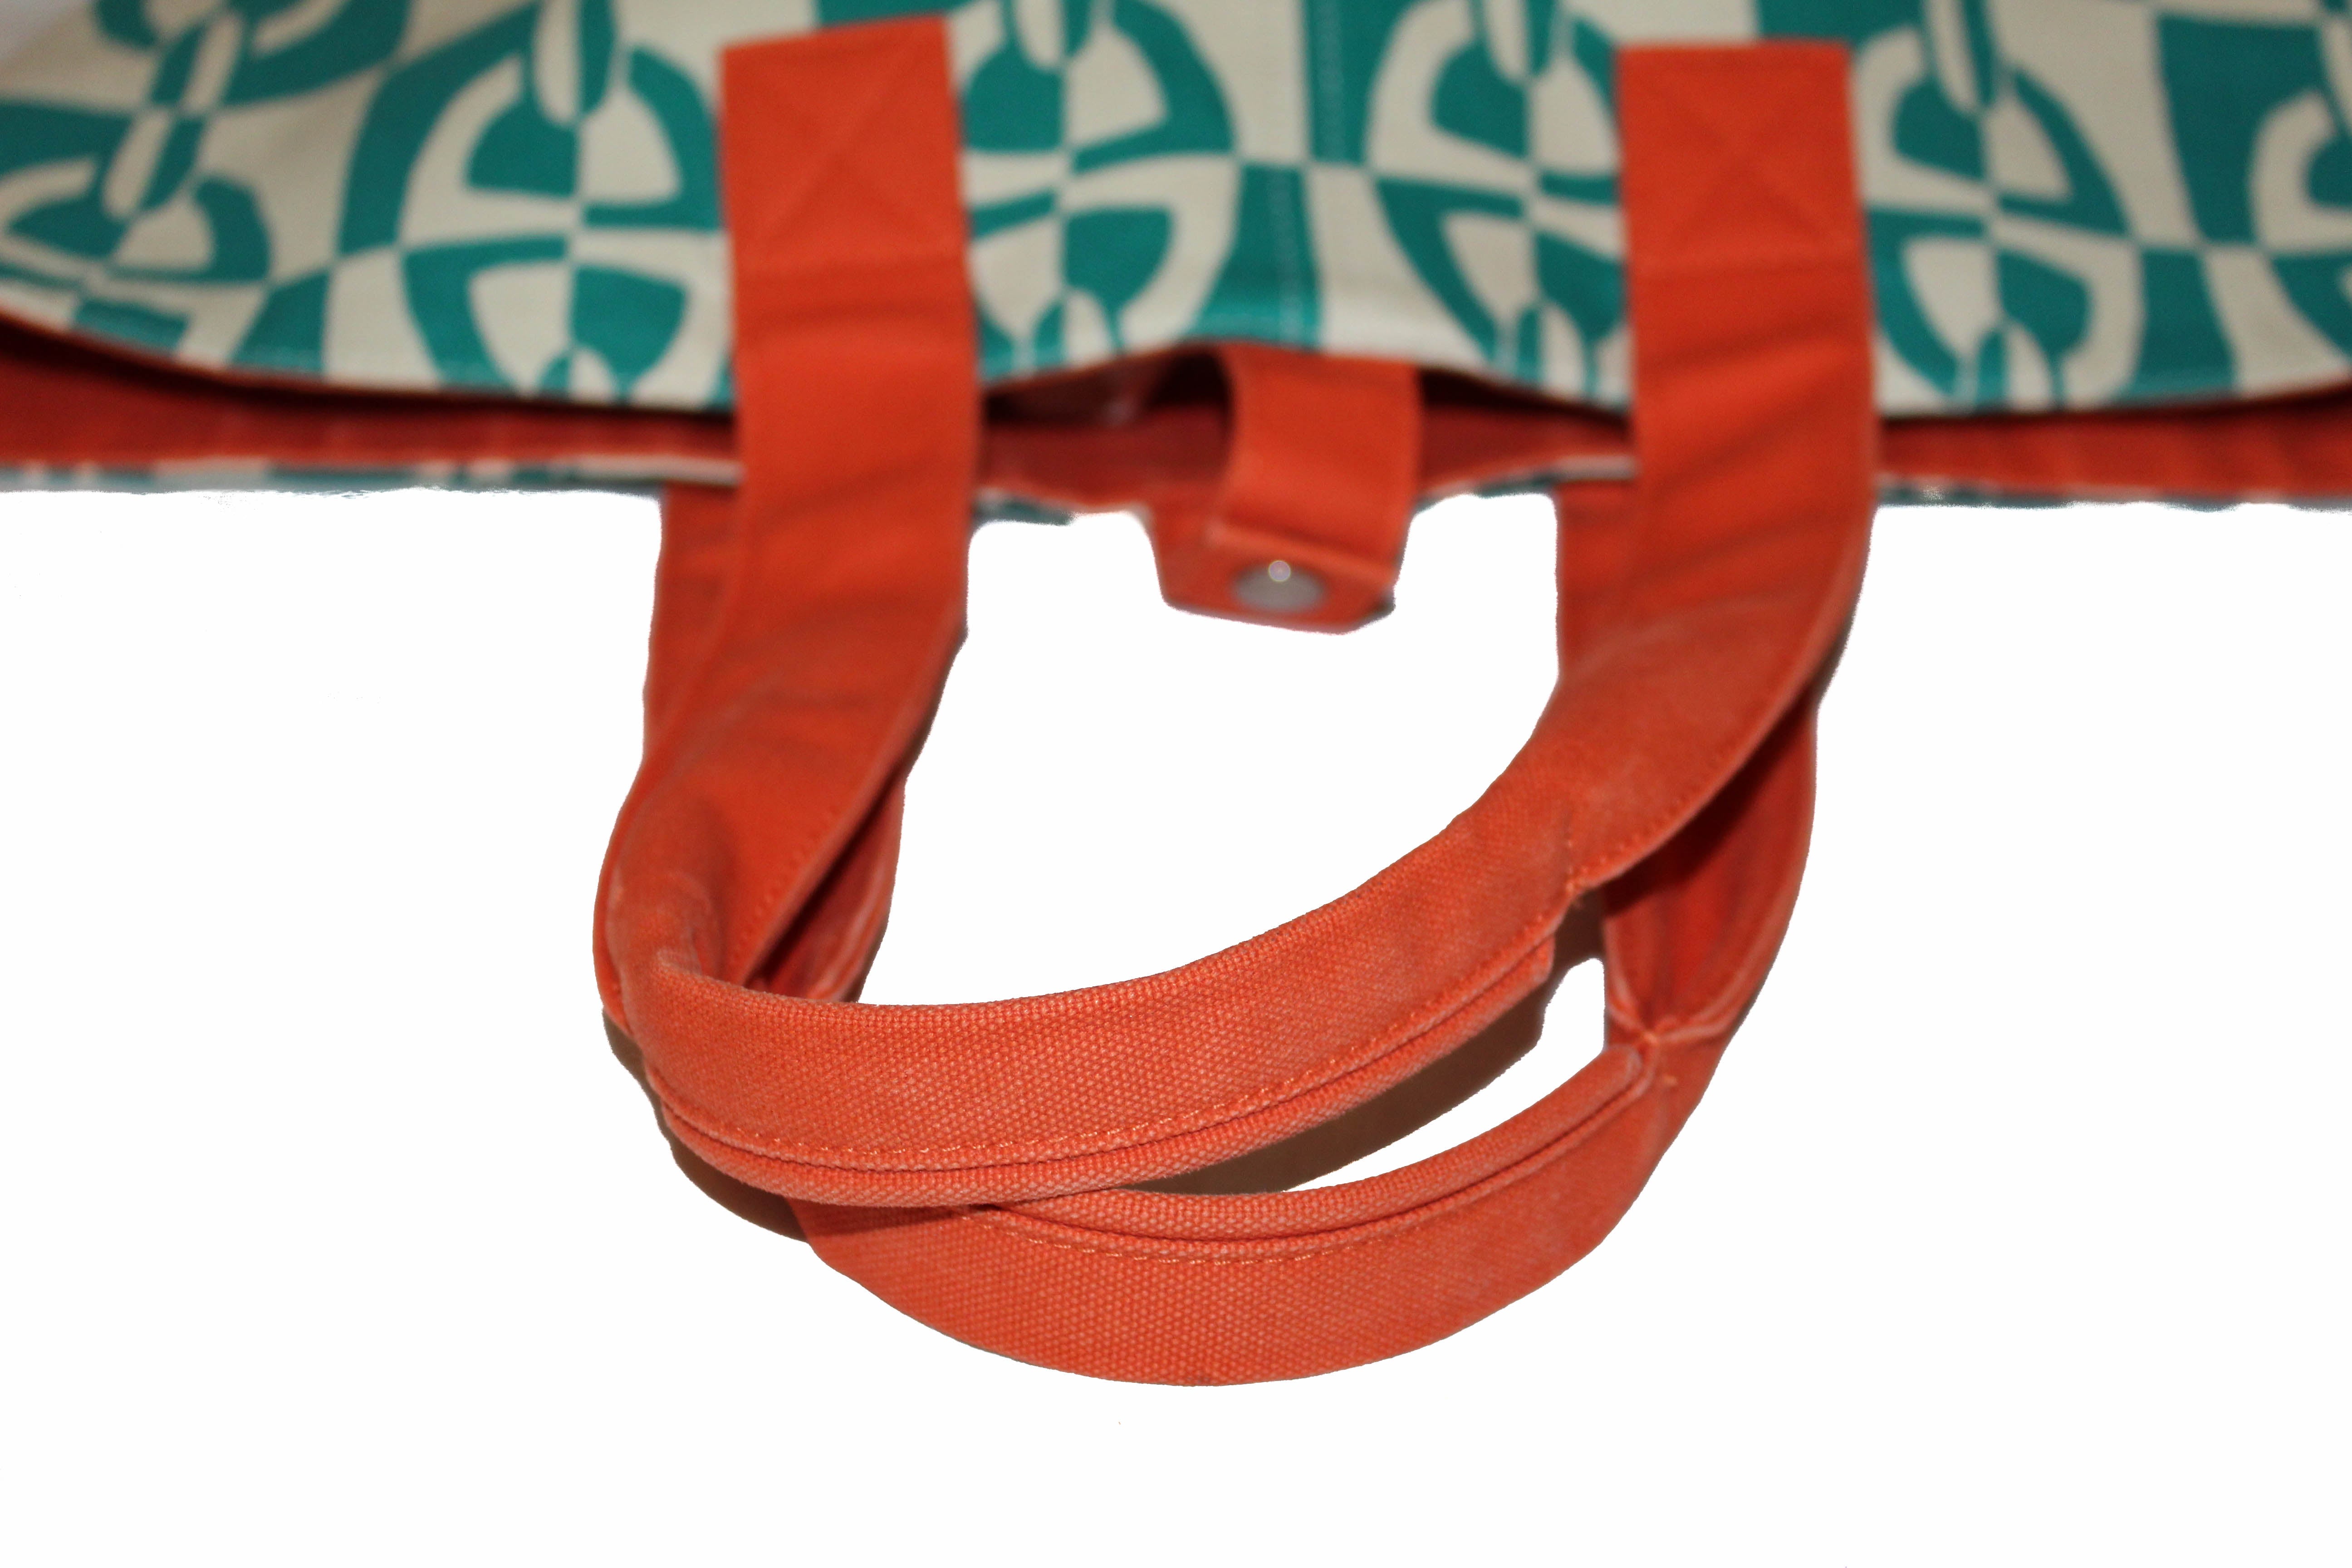 HERMÈS Orange Bags & Handbags for Women, Authenticity Guaranteed